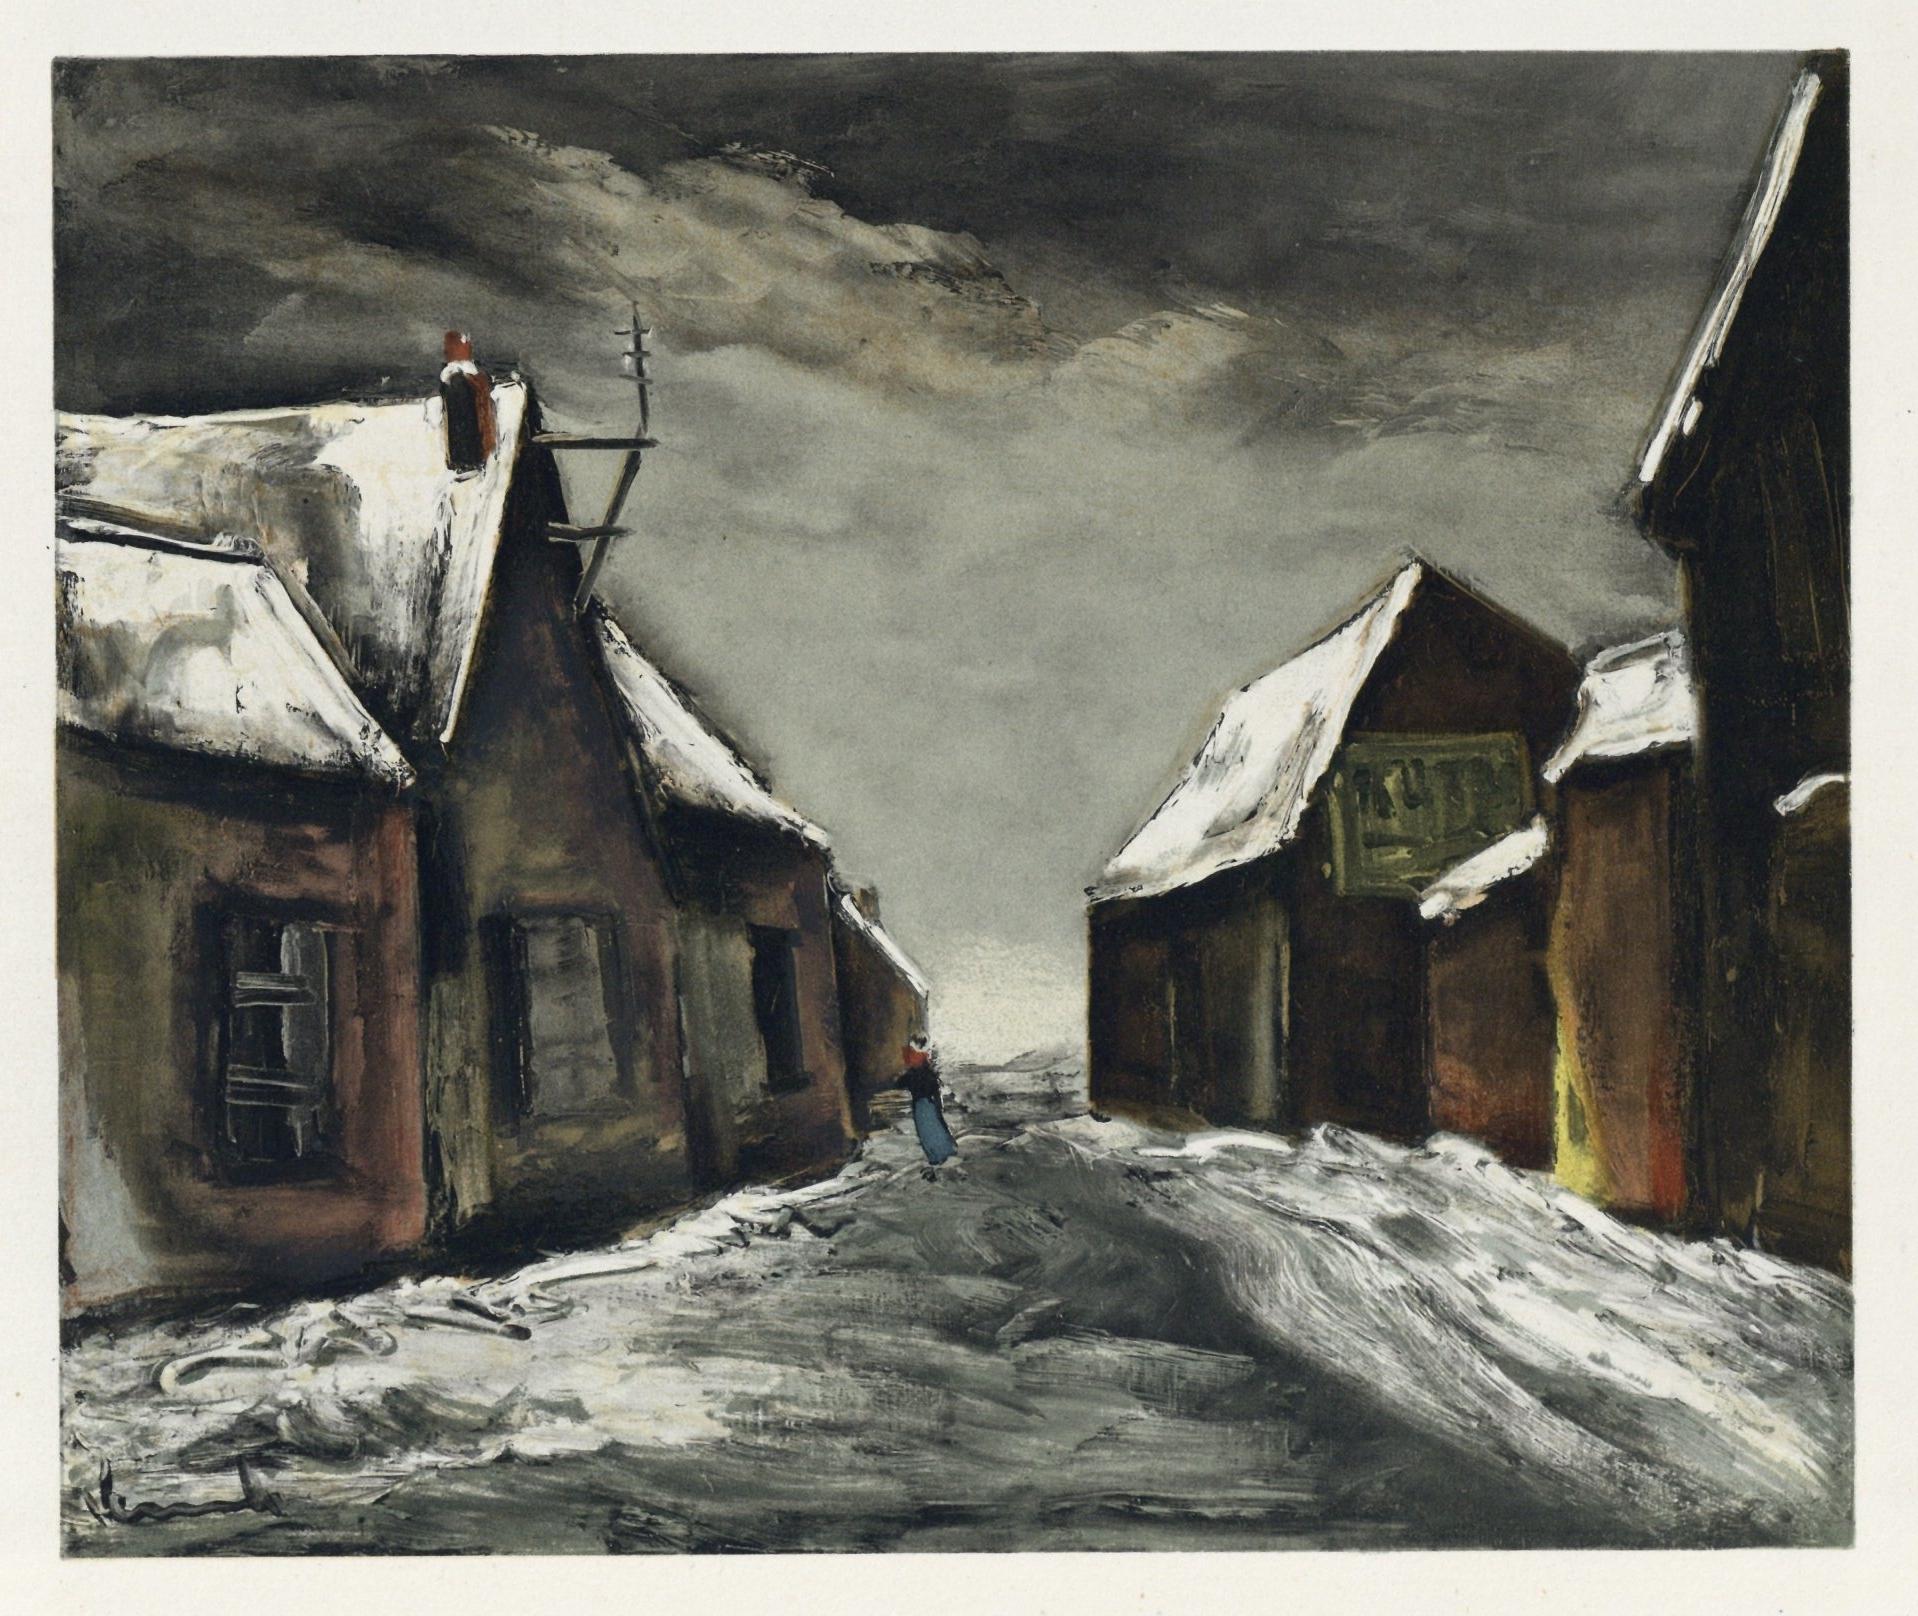 "Allainville under Snow" lithograph - Print by (after) Maurice de Vlaminck